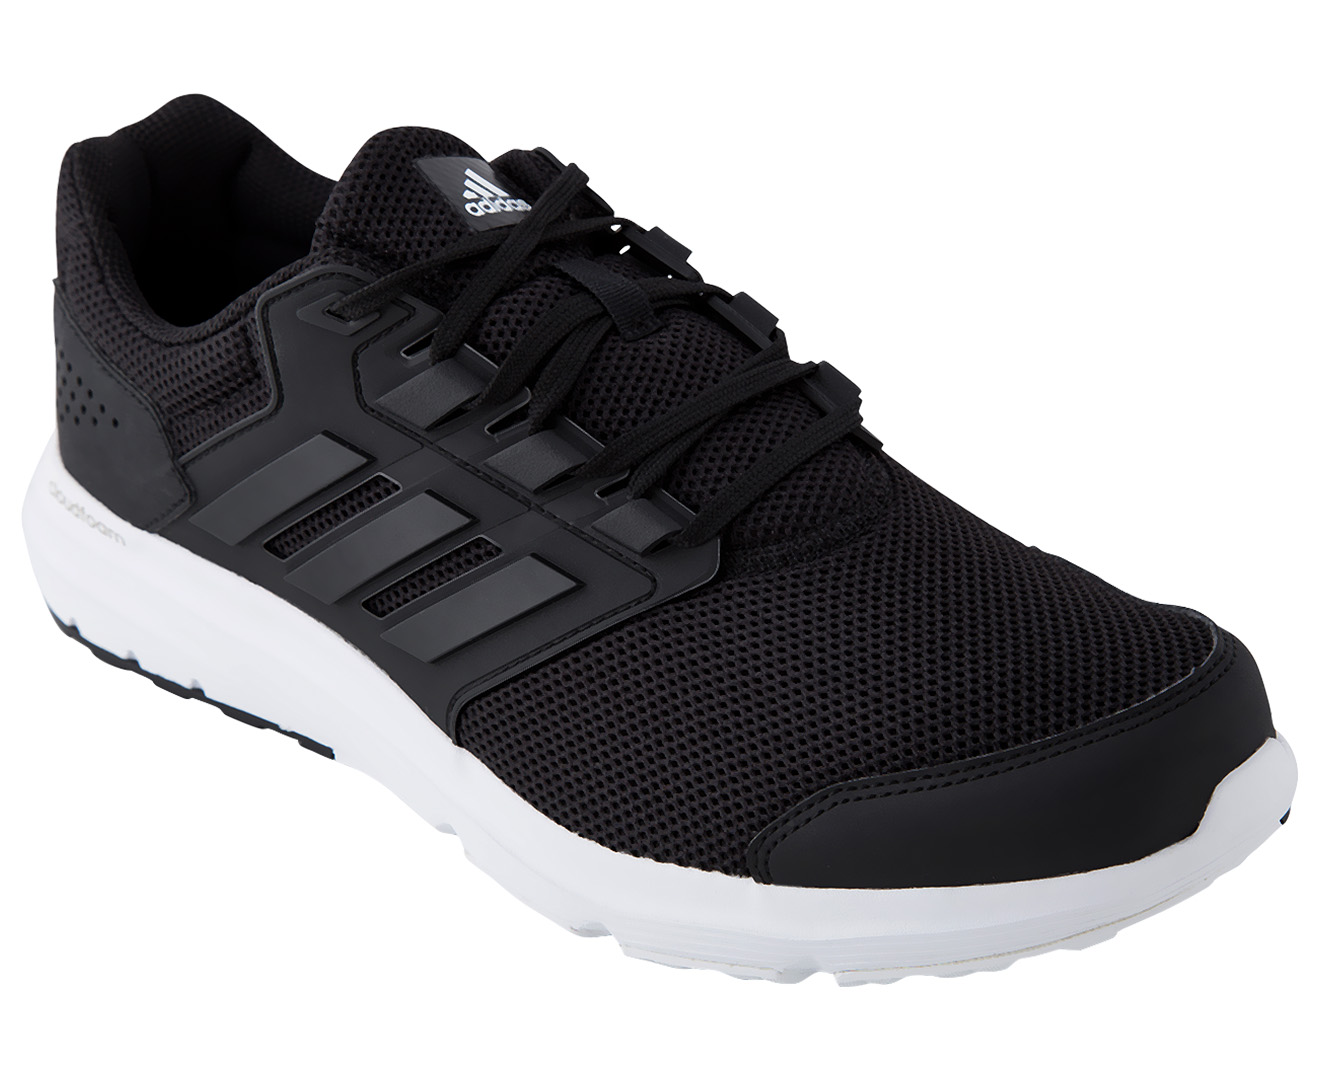 Adidas Men's Galaxy 4 Running Shoes - Black | Catch.com.au